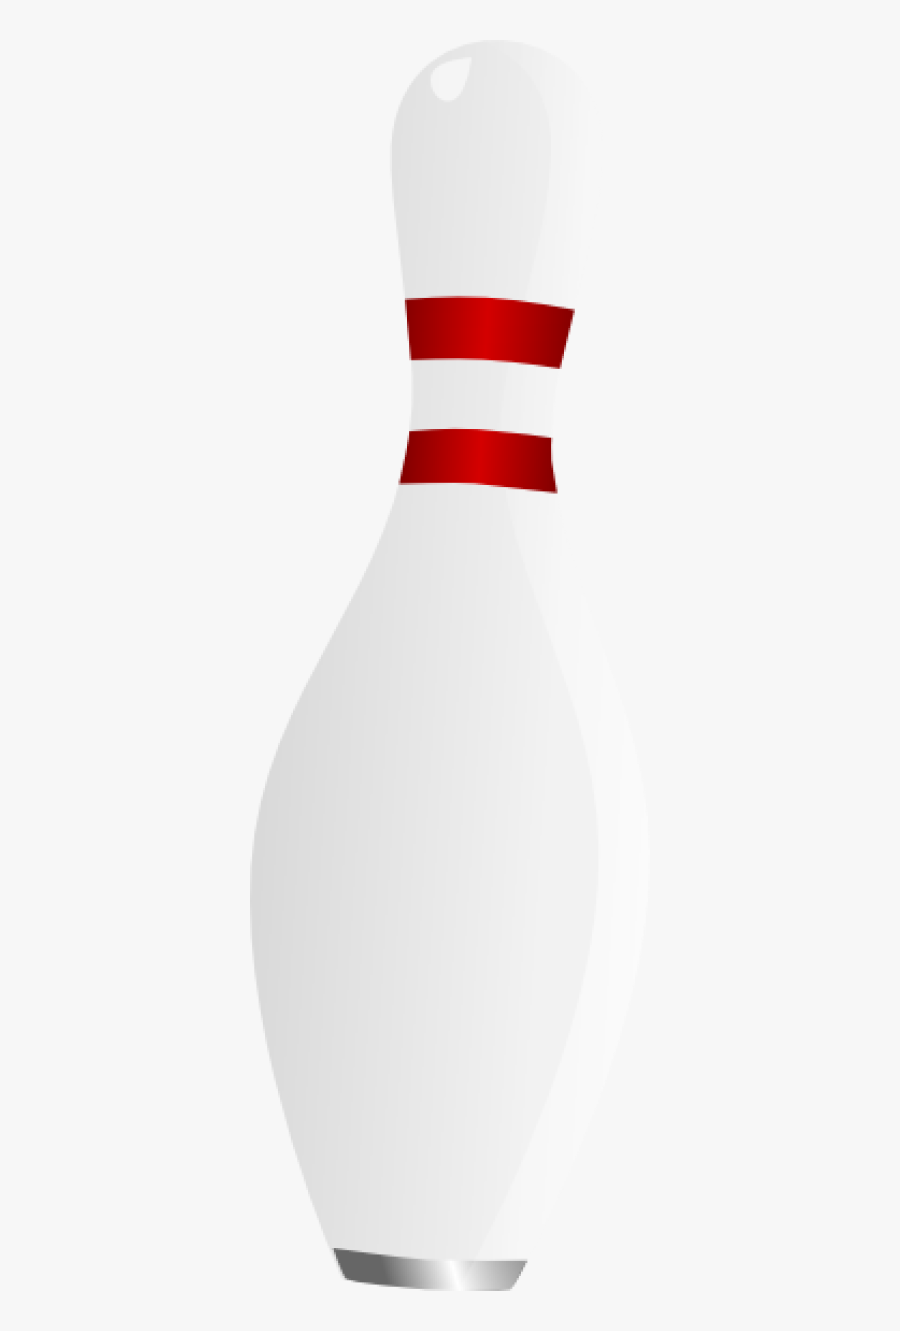 Bowling Pin Vector Png - Lampshade, Transparent Clipart